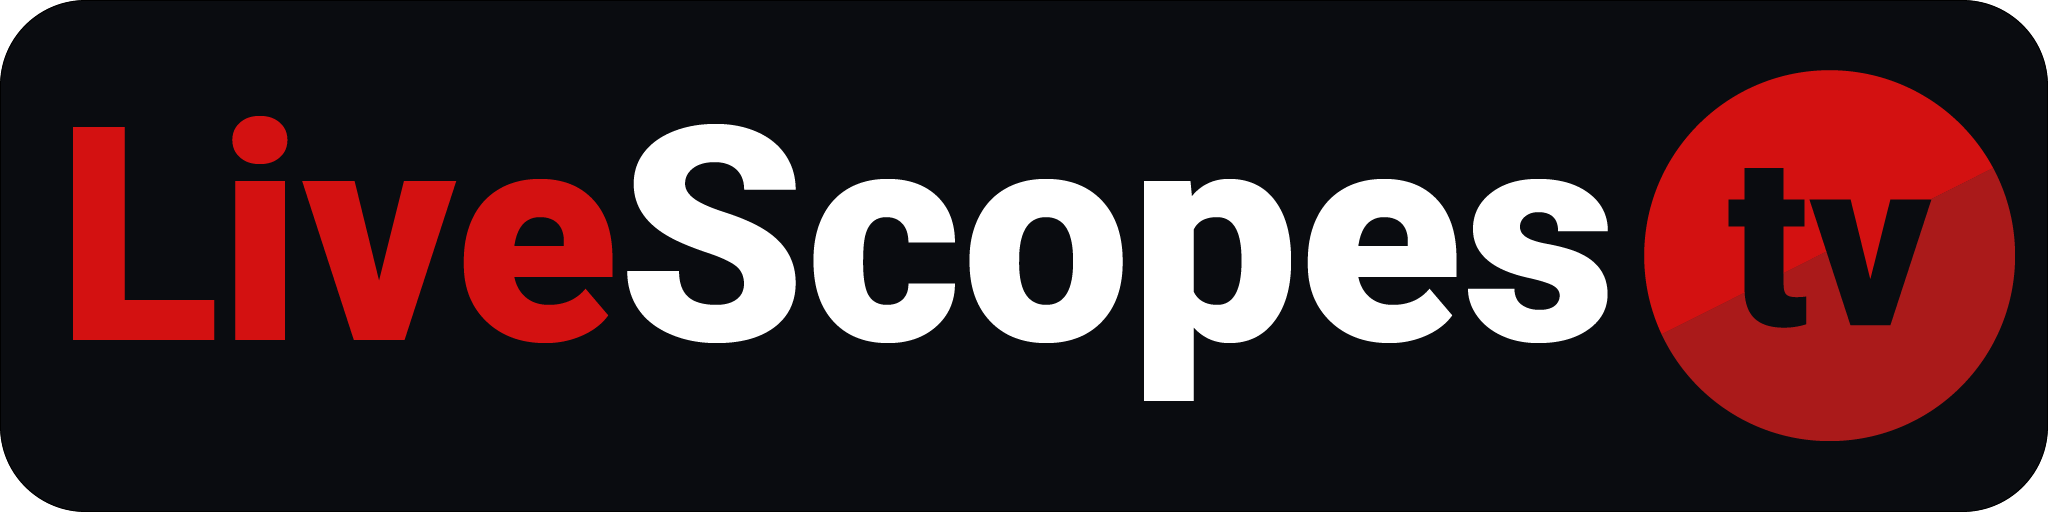 Live Scopes TV Logo